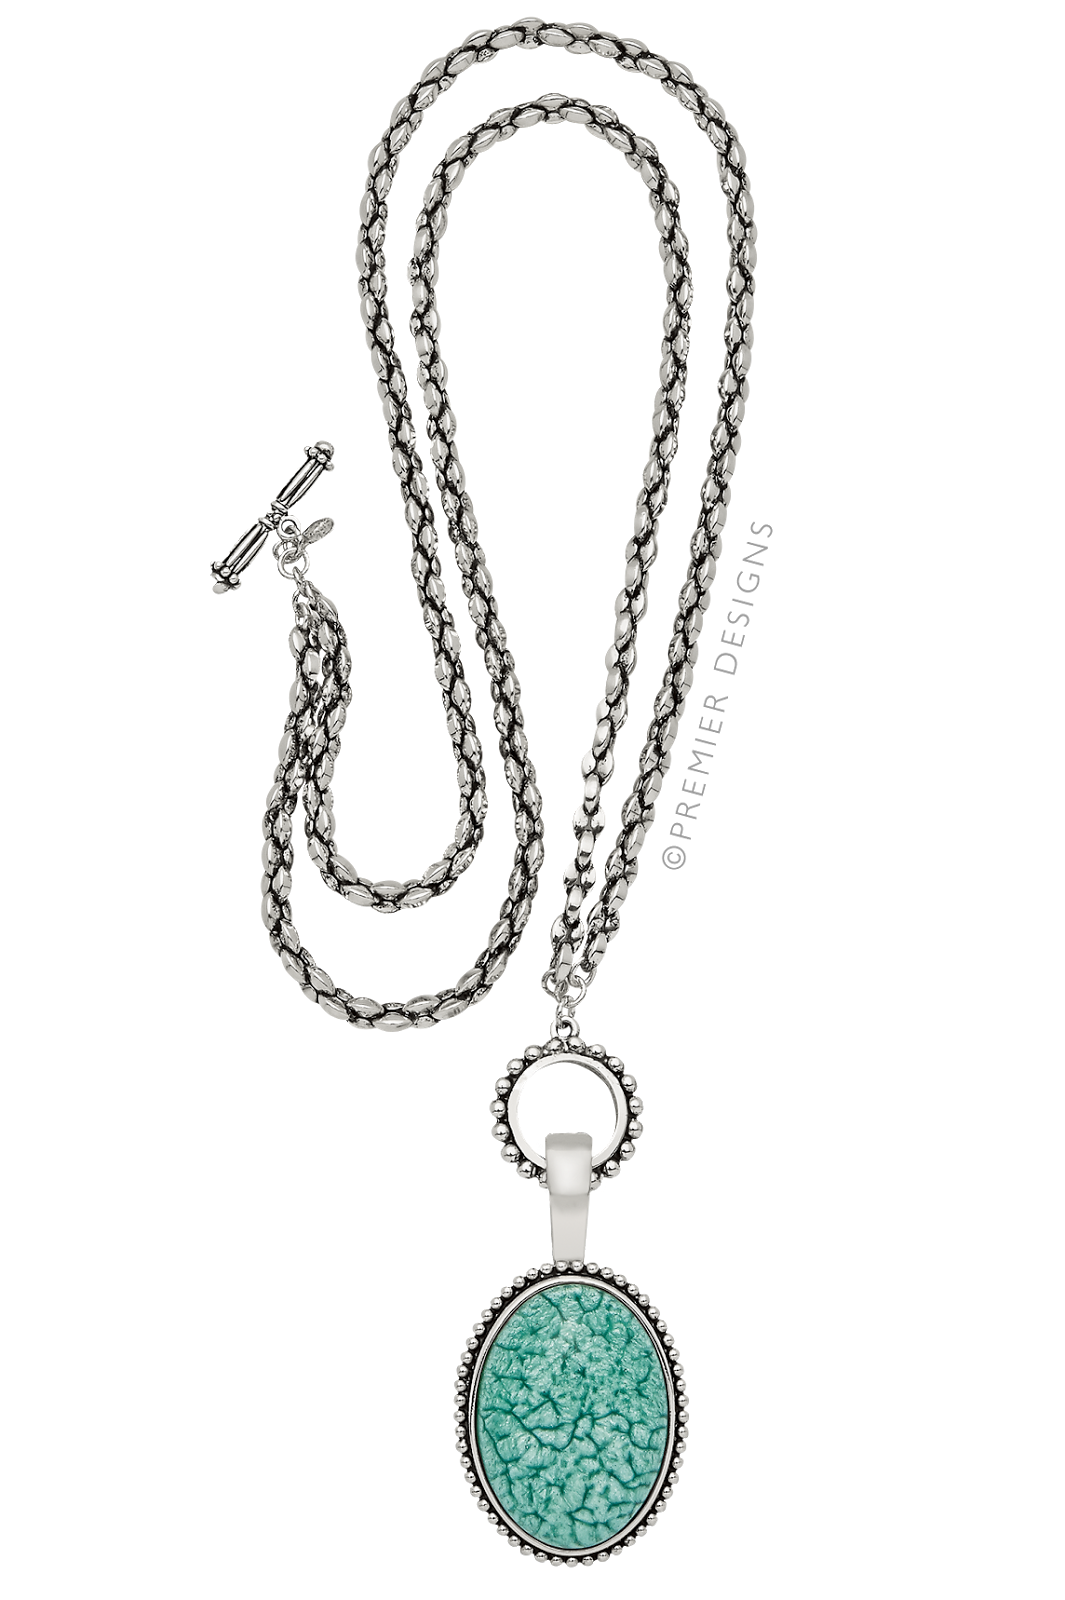 jewelry clipart premier designs